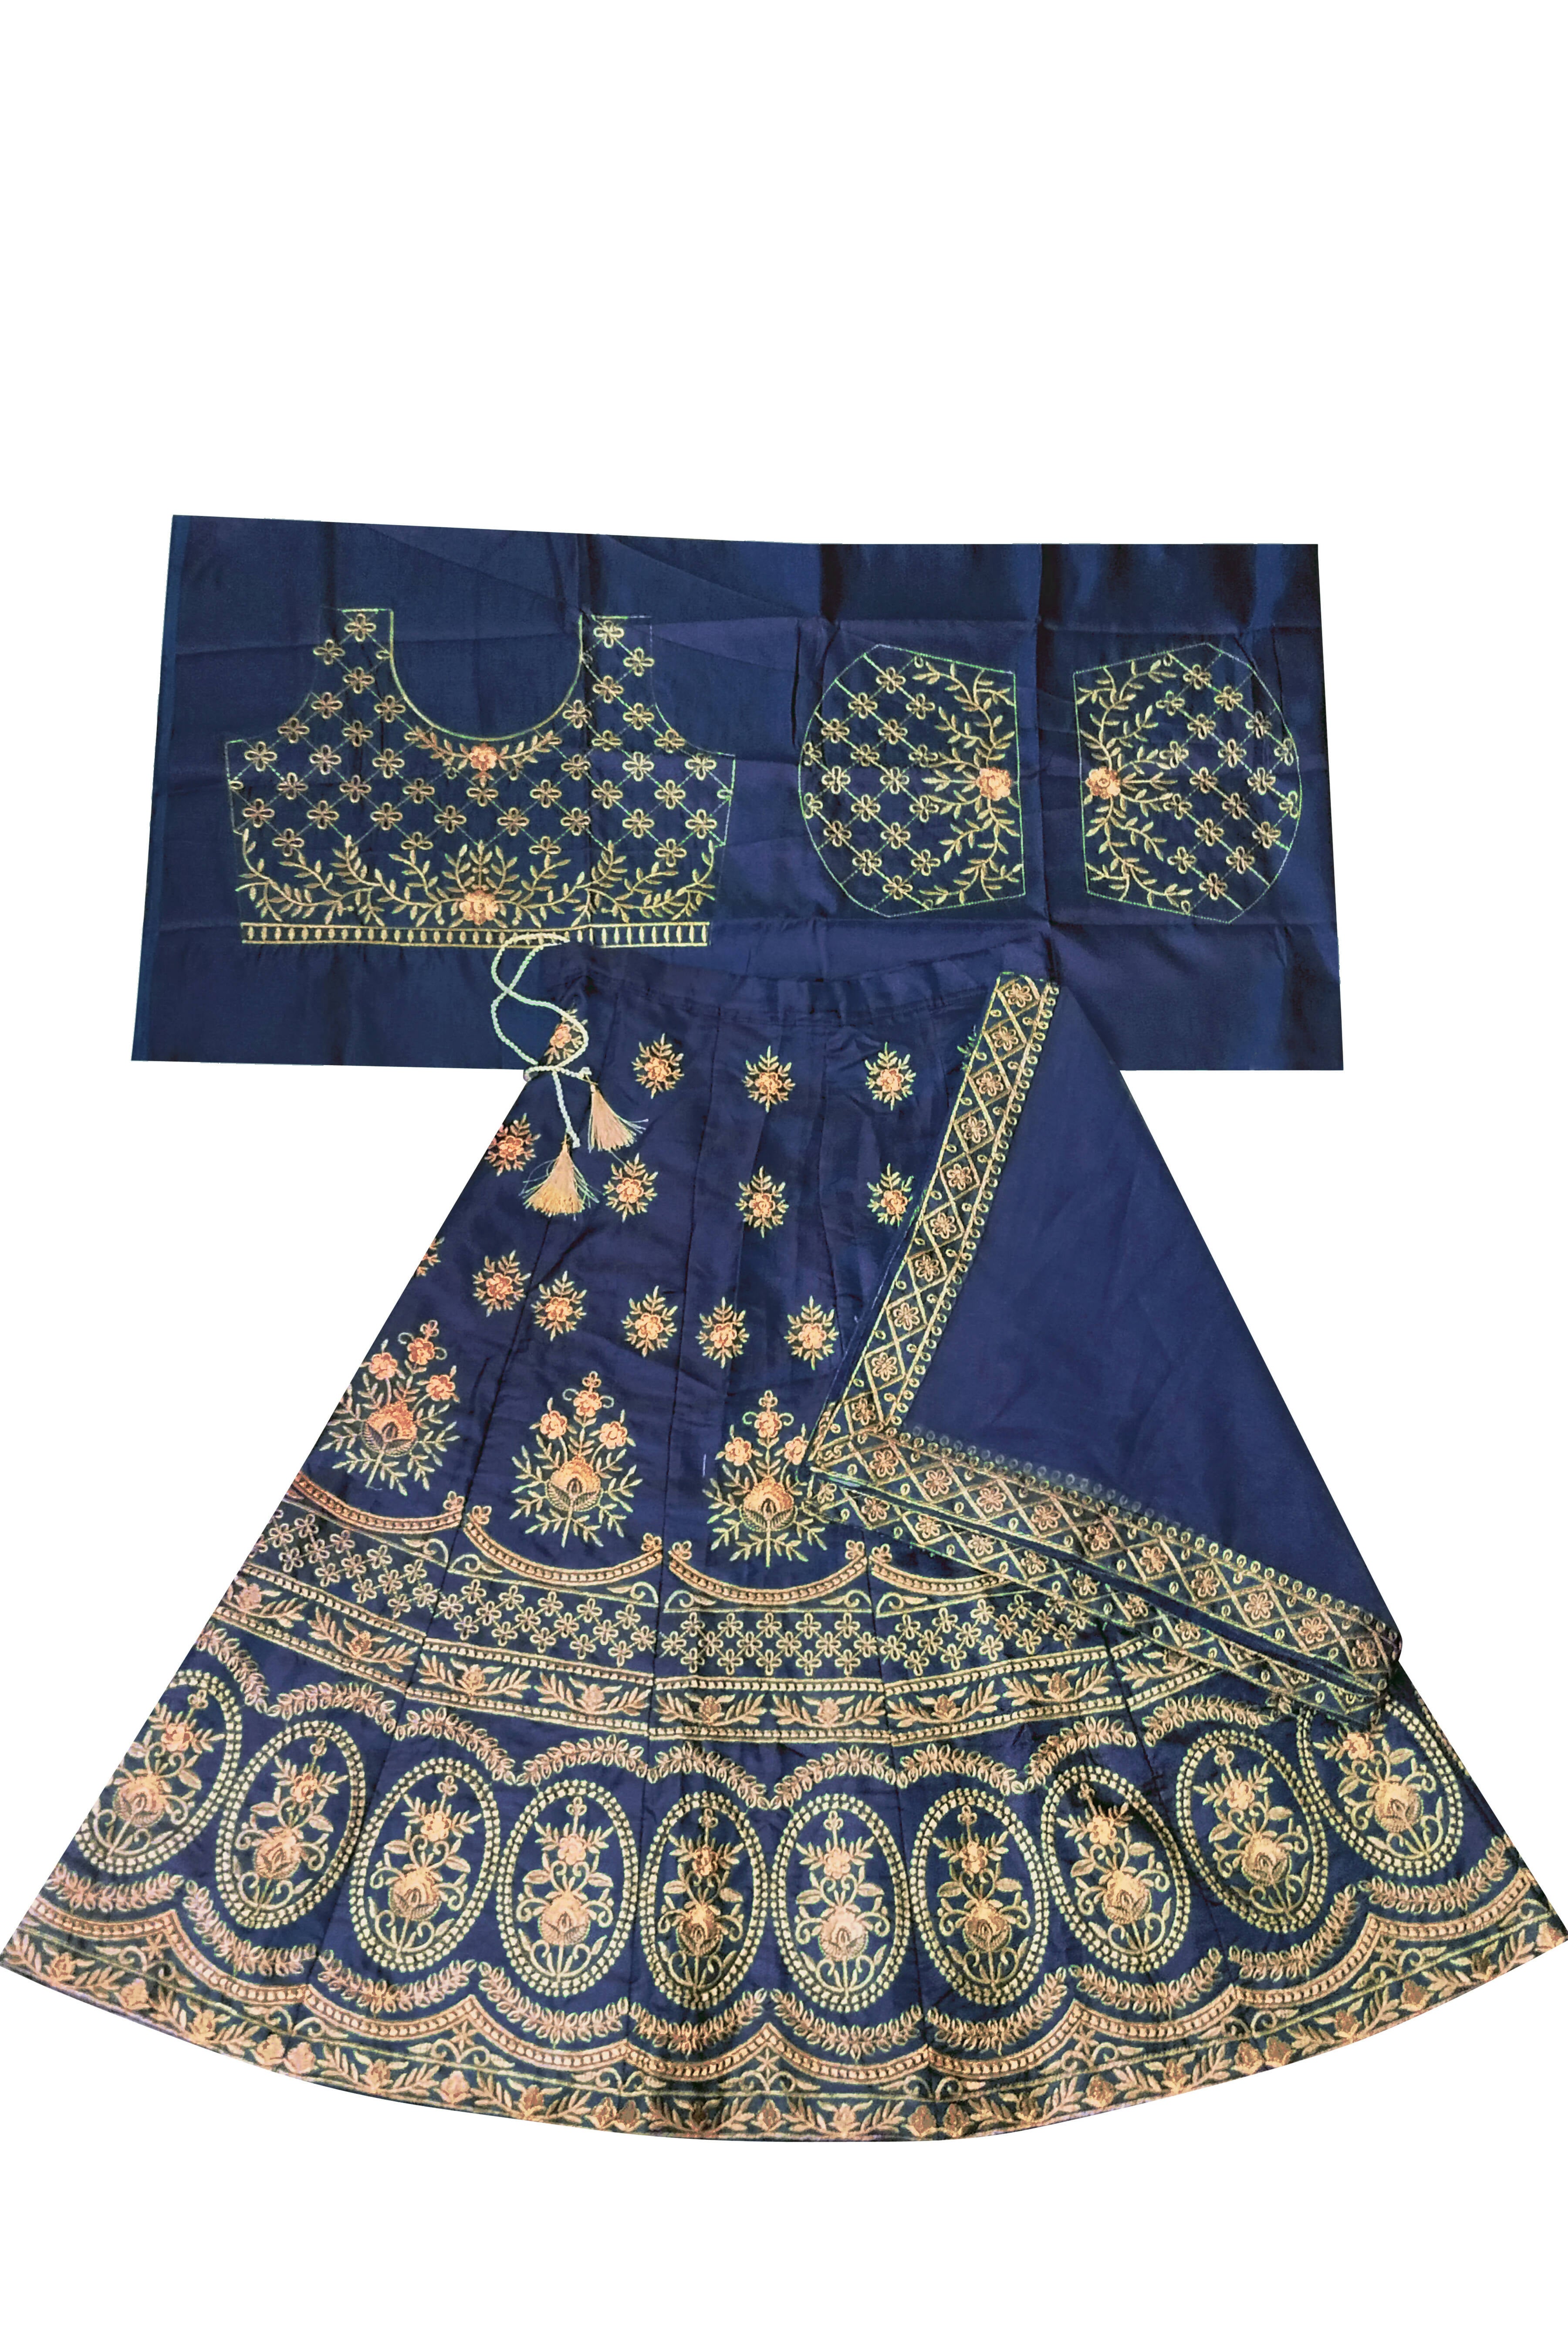 Womens Pioneer Woman Costume Sz Medium 8-10, Women's, Size: Medium (8-10), Blue